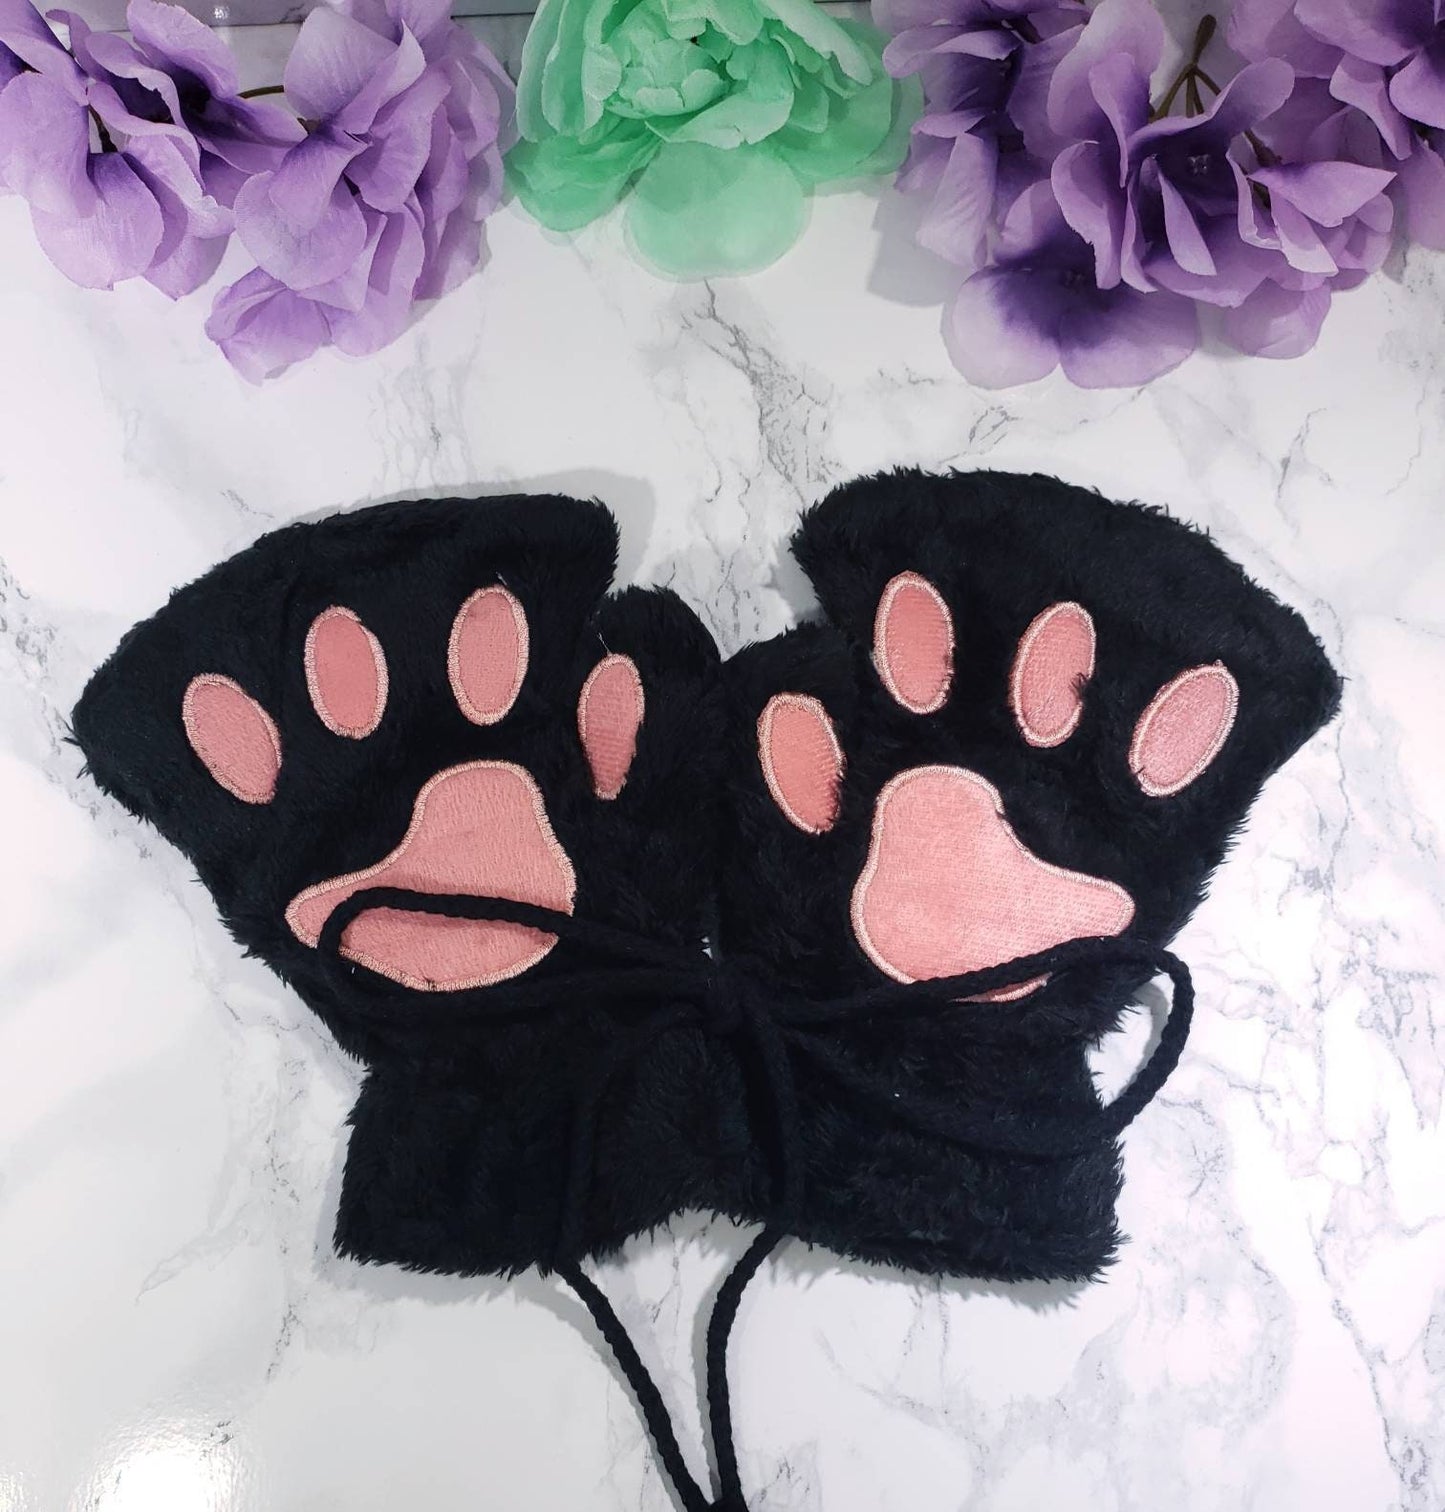 Black Pet Play Fingerless Gloves, Animal Paws, Cosplay Paws